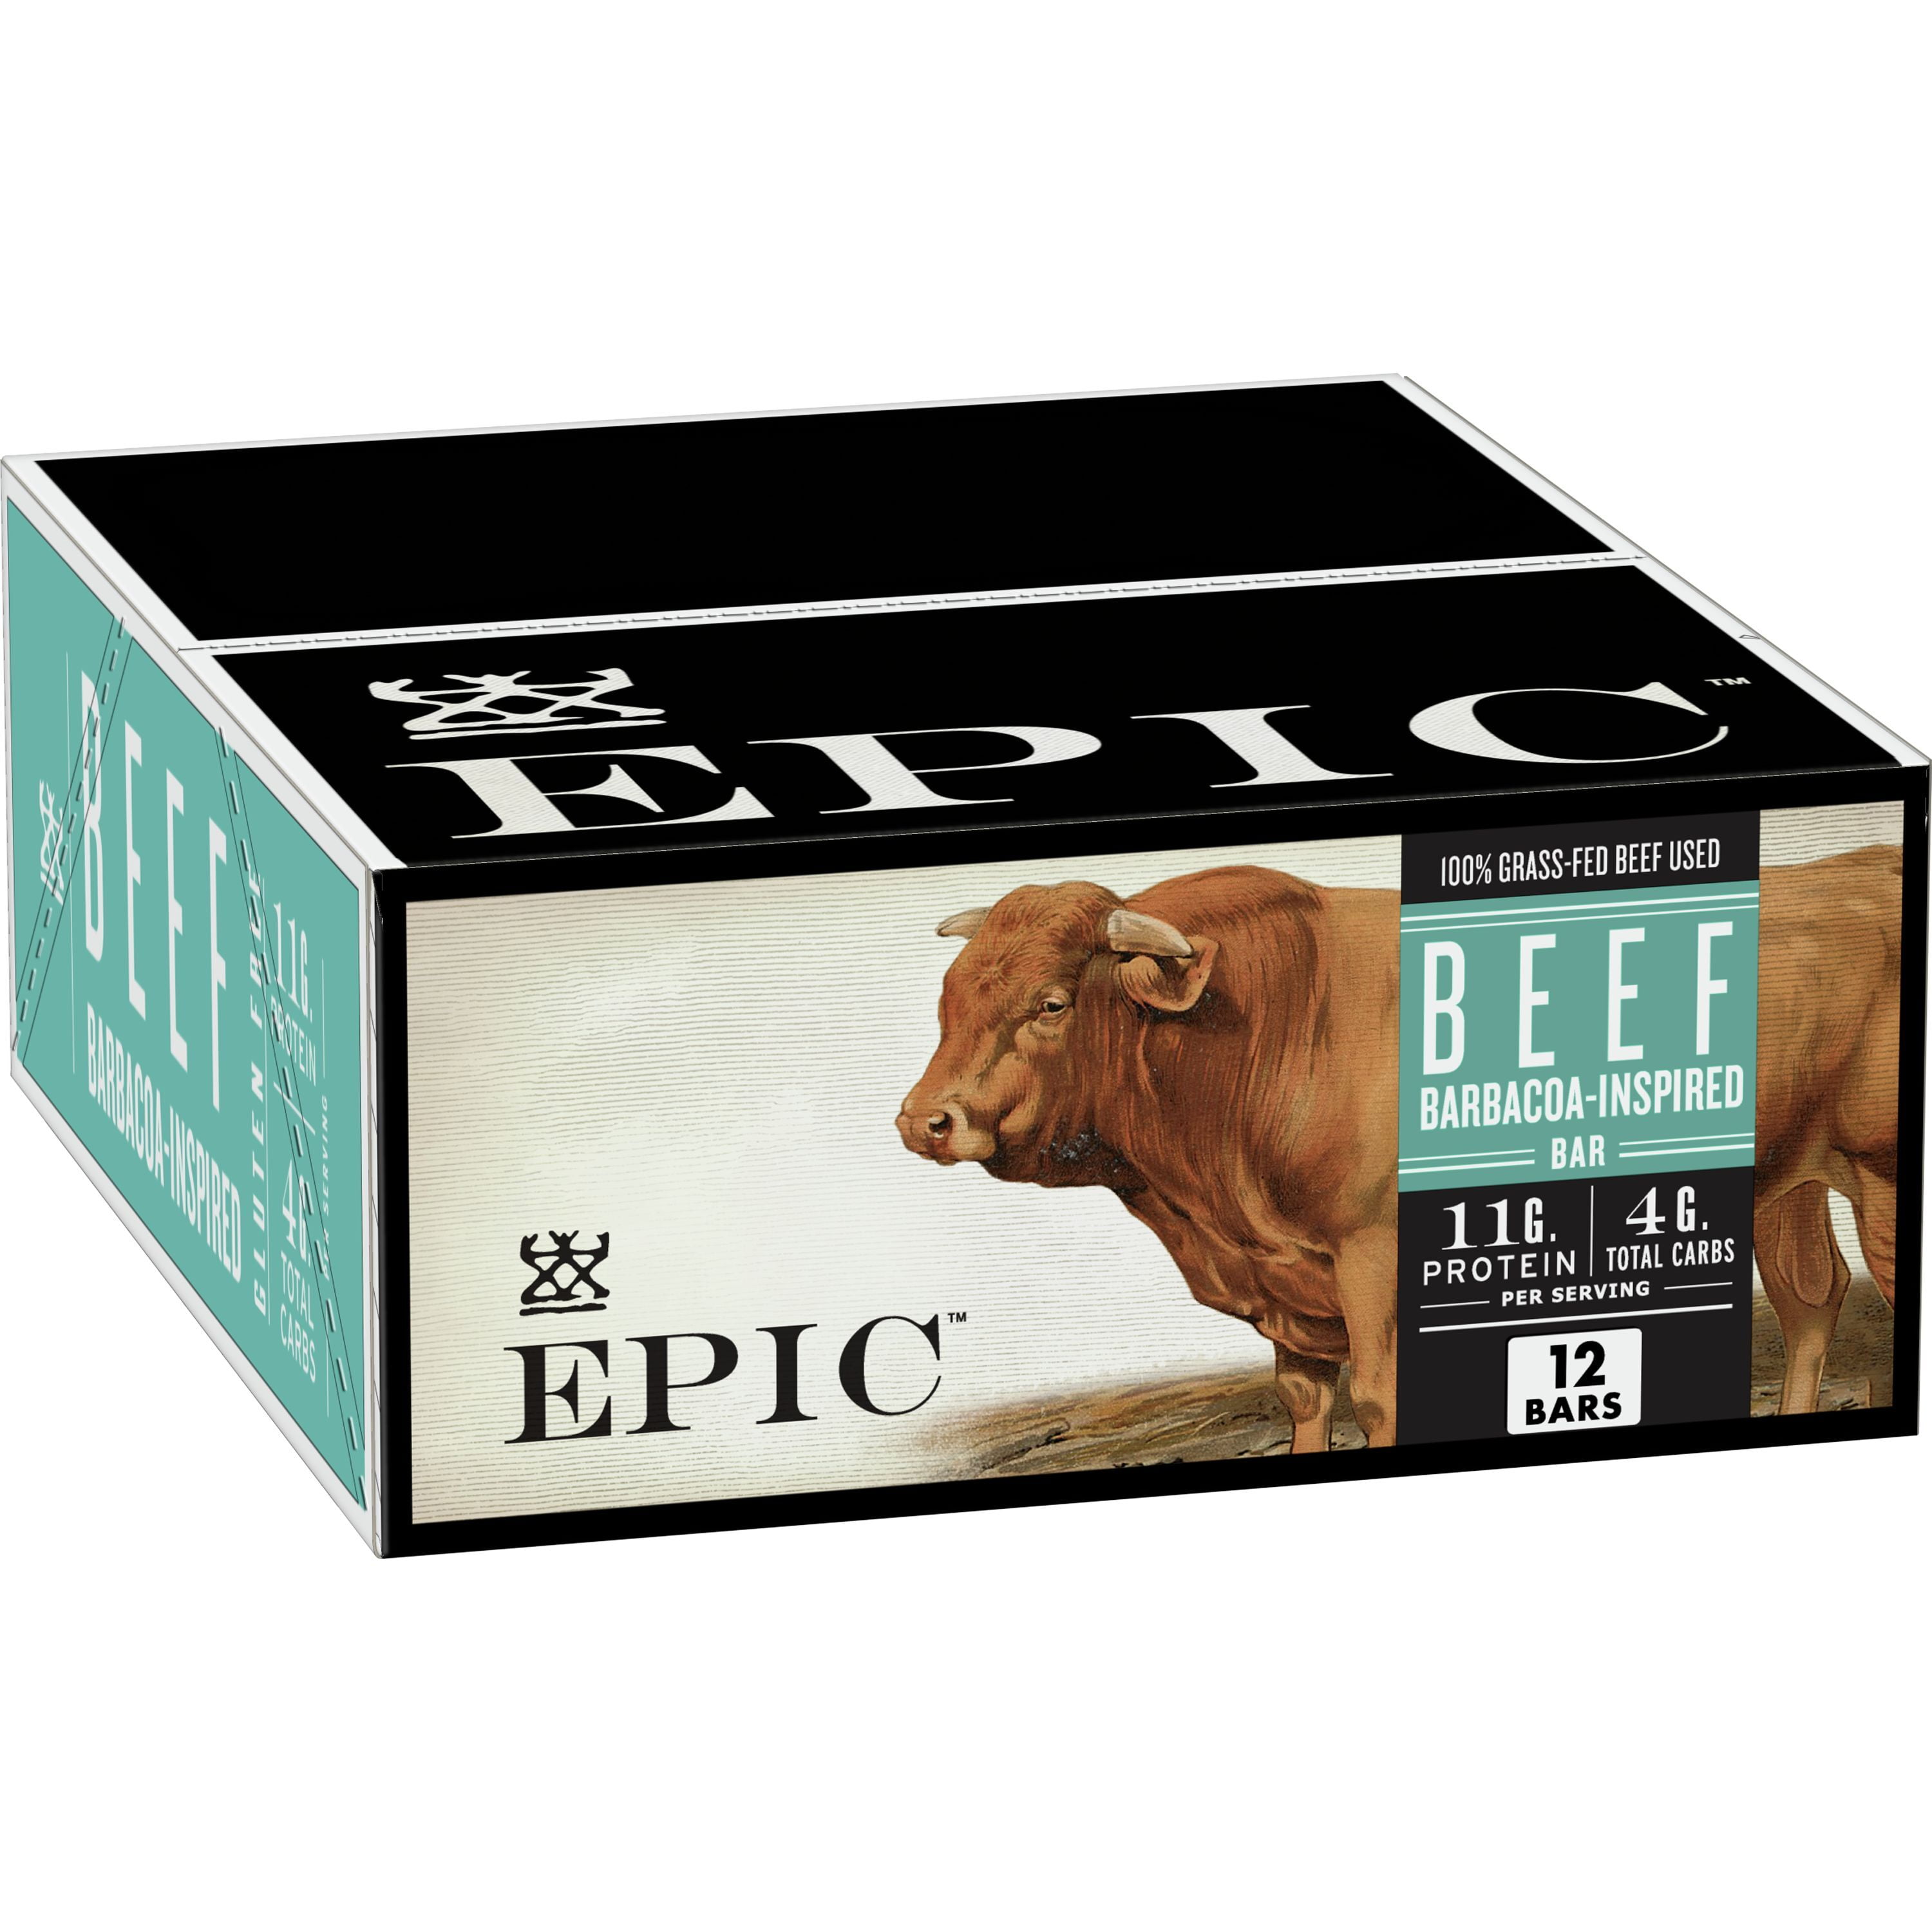 EPIC Beef Barbacoa Inspired Bar, Keto Friendly, Whole30, Paleo Friendly,  Gluten Free 12 ct, 1.3 oz bars 